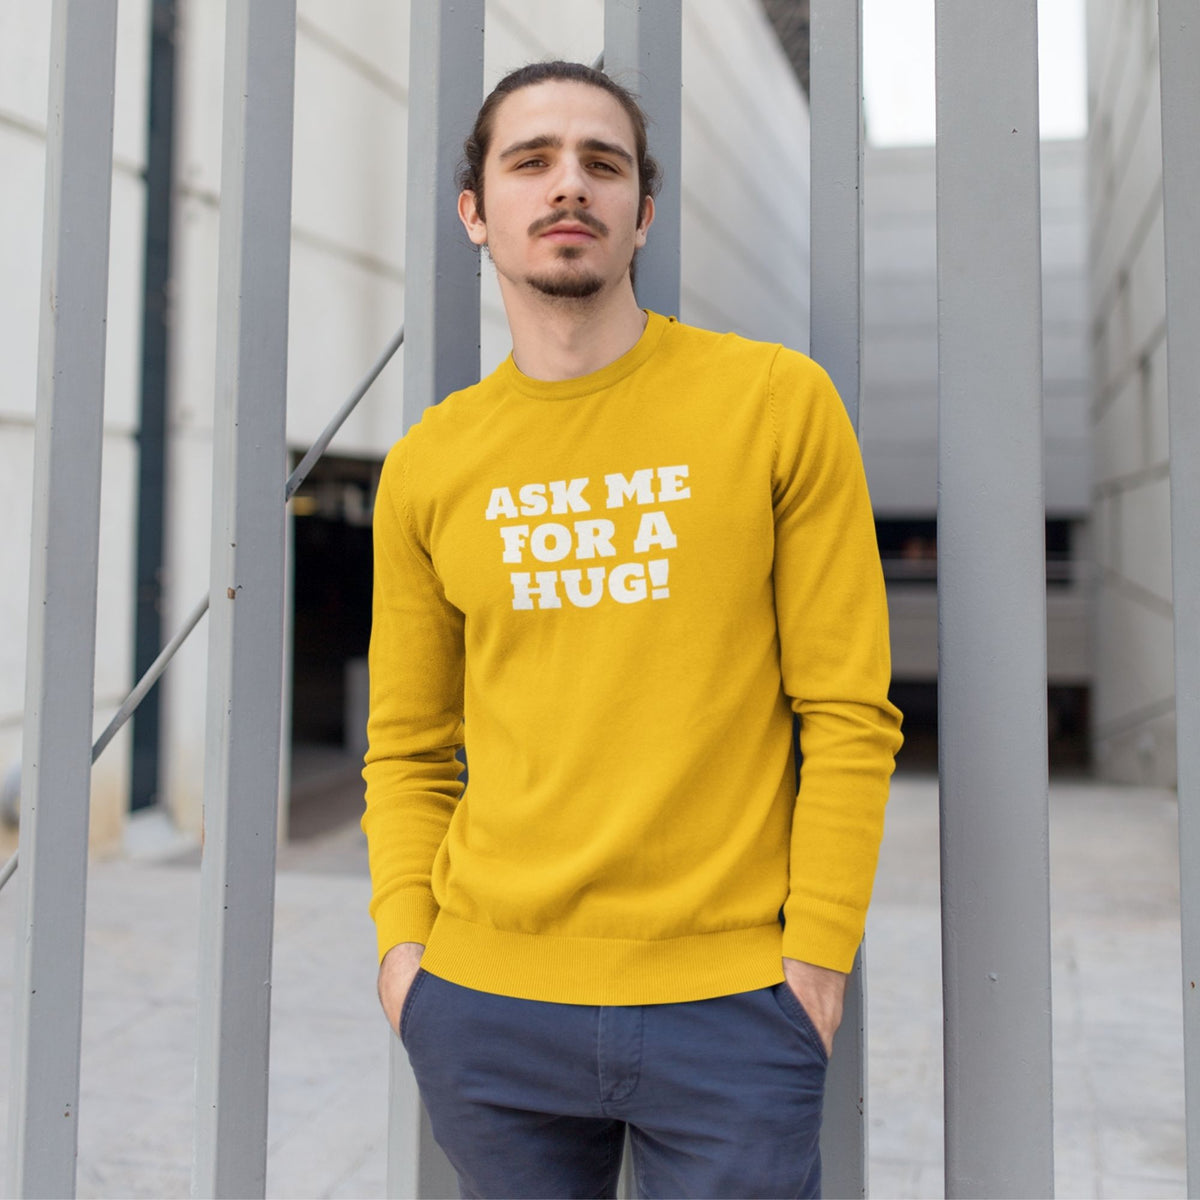 ask-me-for-a-hug-cotton-printed-unisex-golden-yellow-men-model-sweatshirt-gogirgit-com